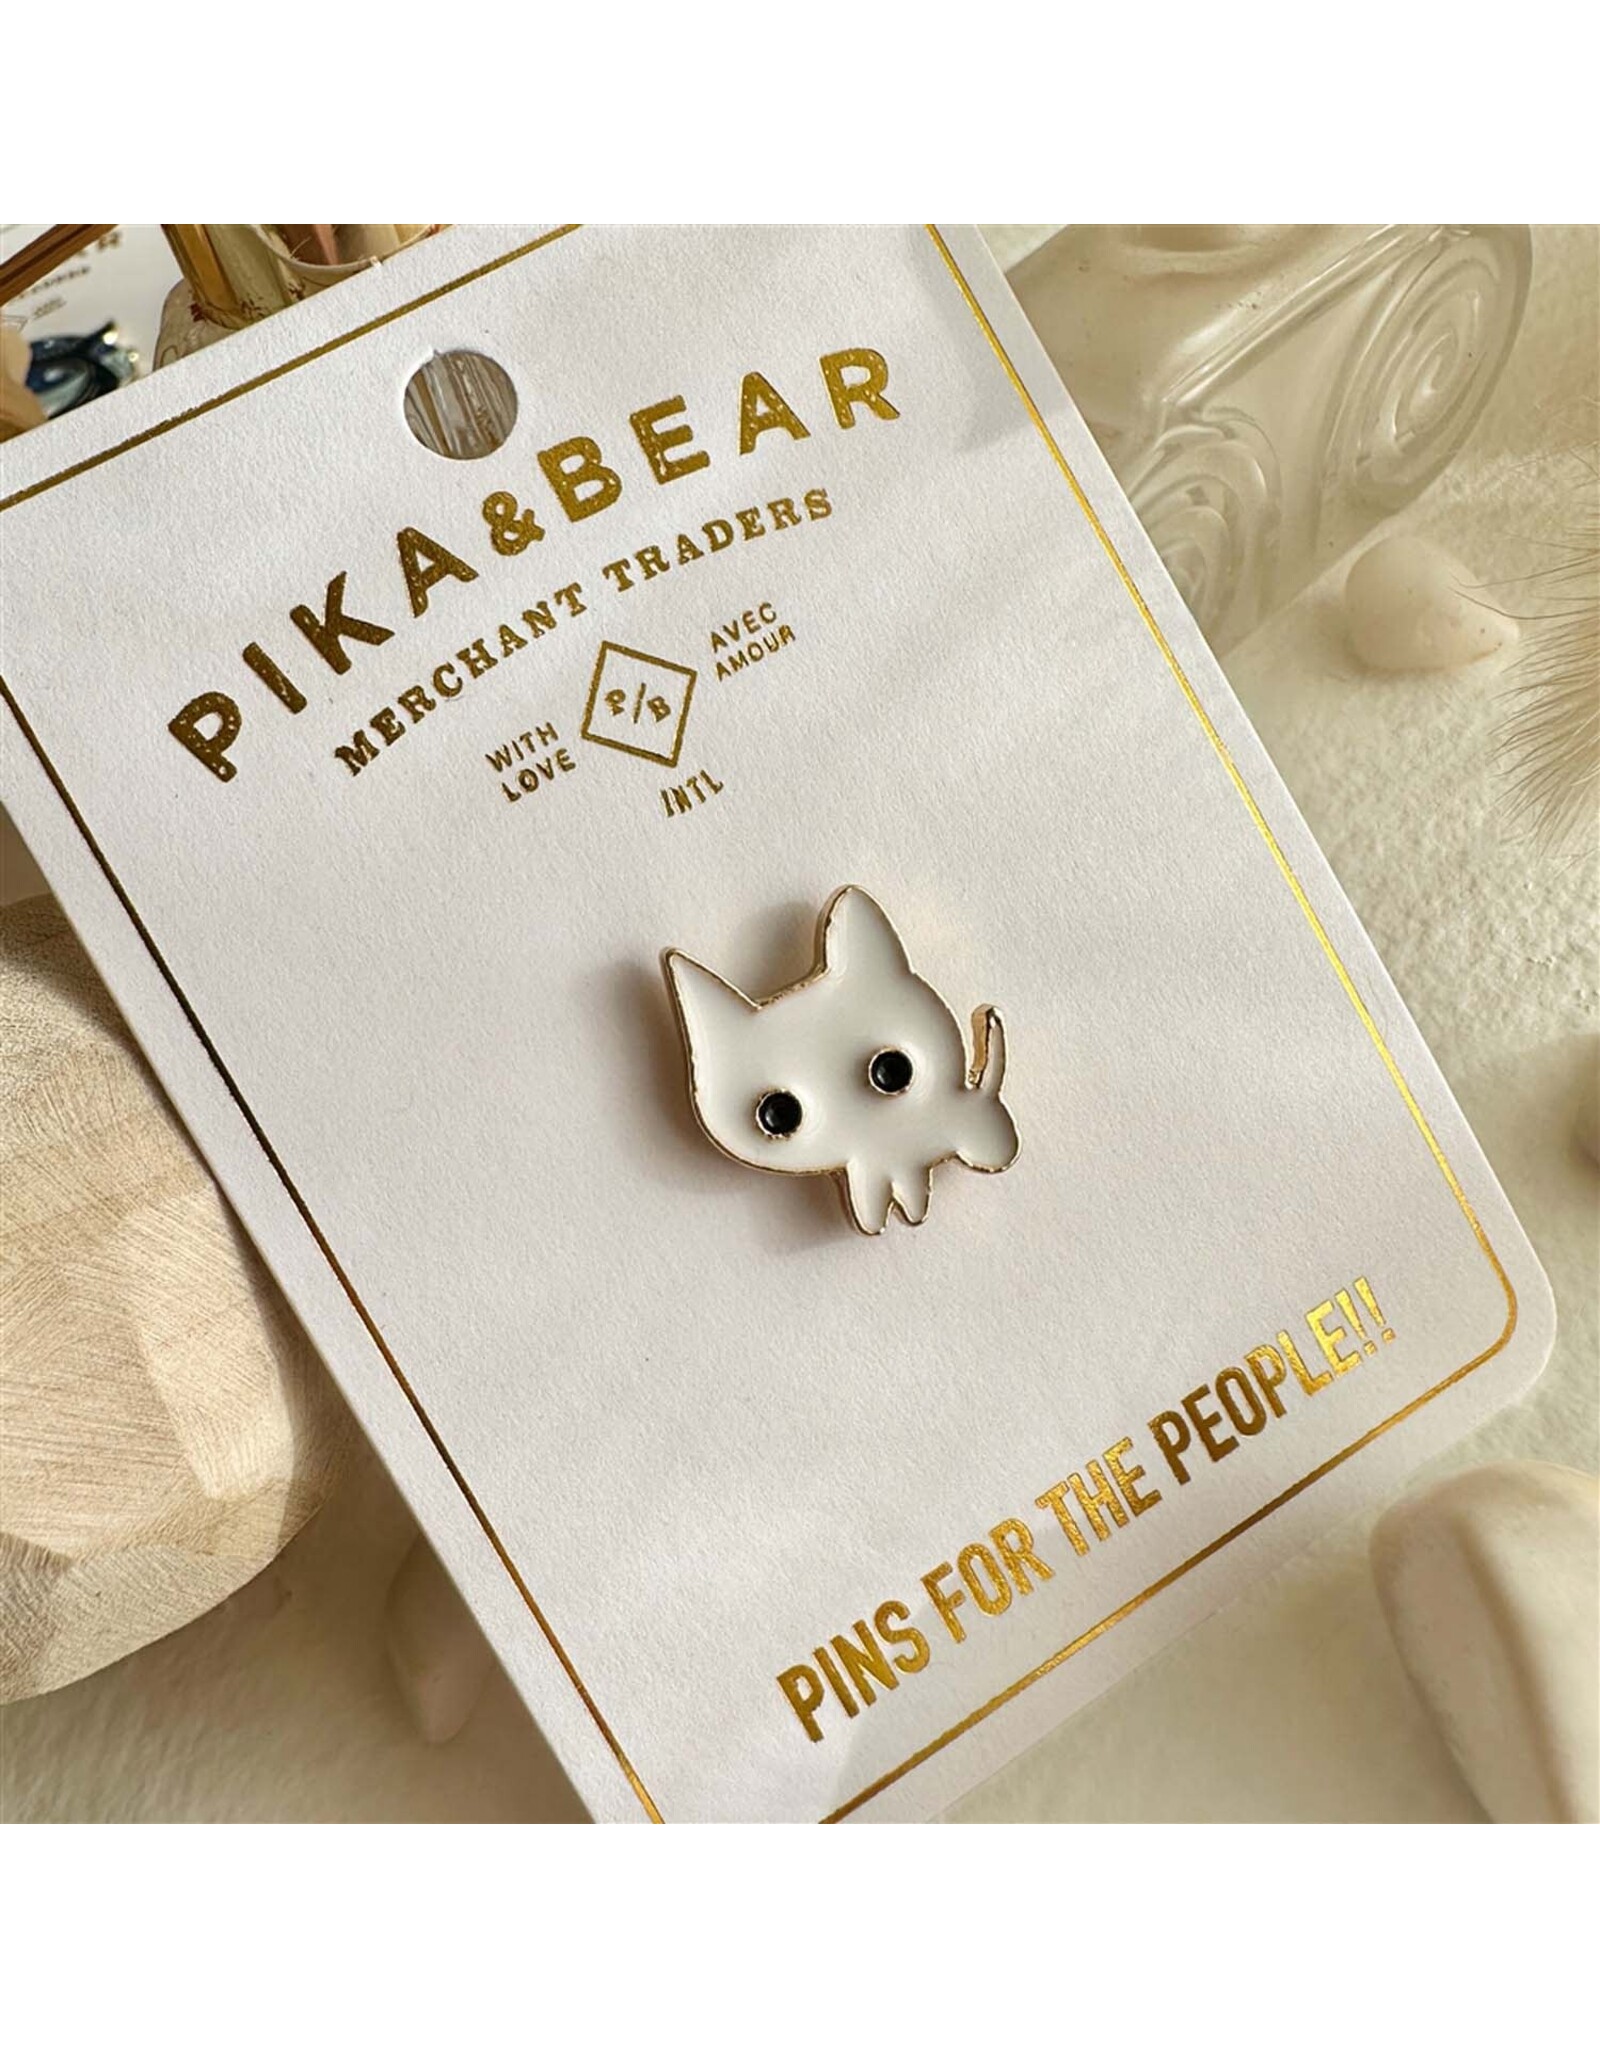 Pika & Bear Pika & Bear - "Terrance" Tiny Timid Cat Enamel Pin